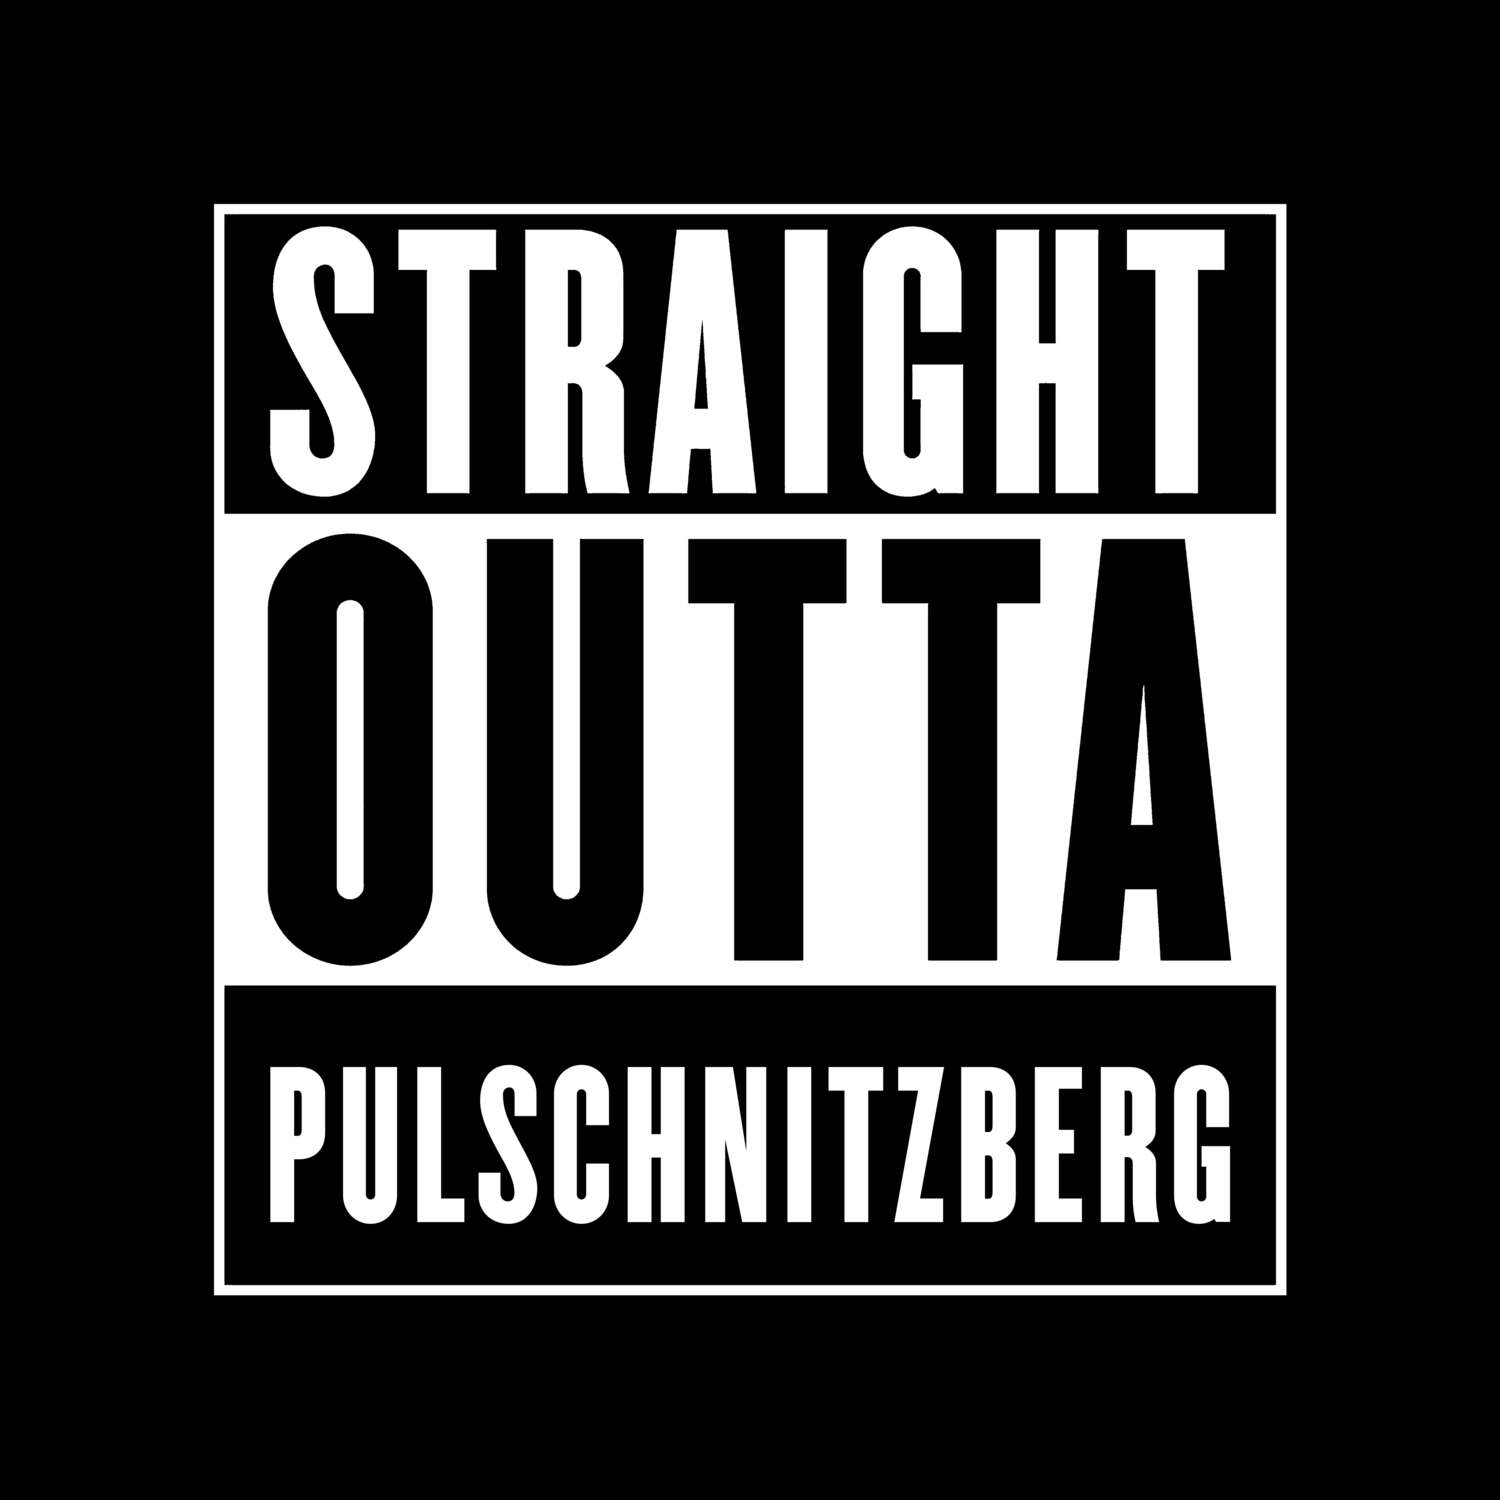 Pulschnitzberg T-Shirt »Straight Outta«